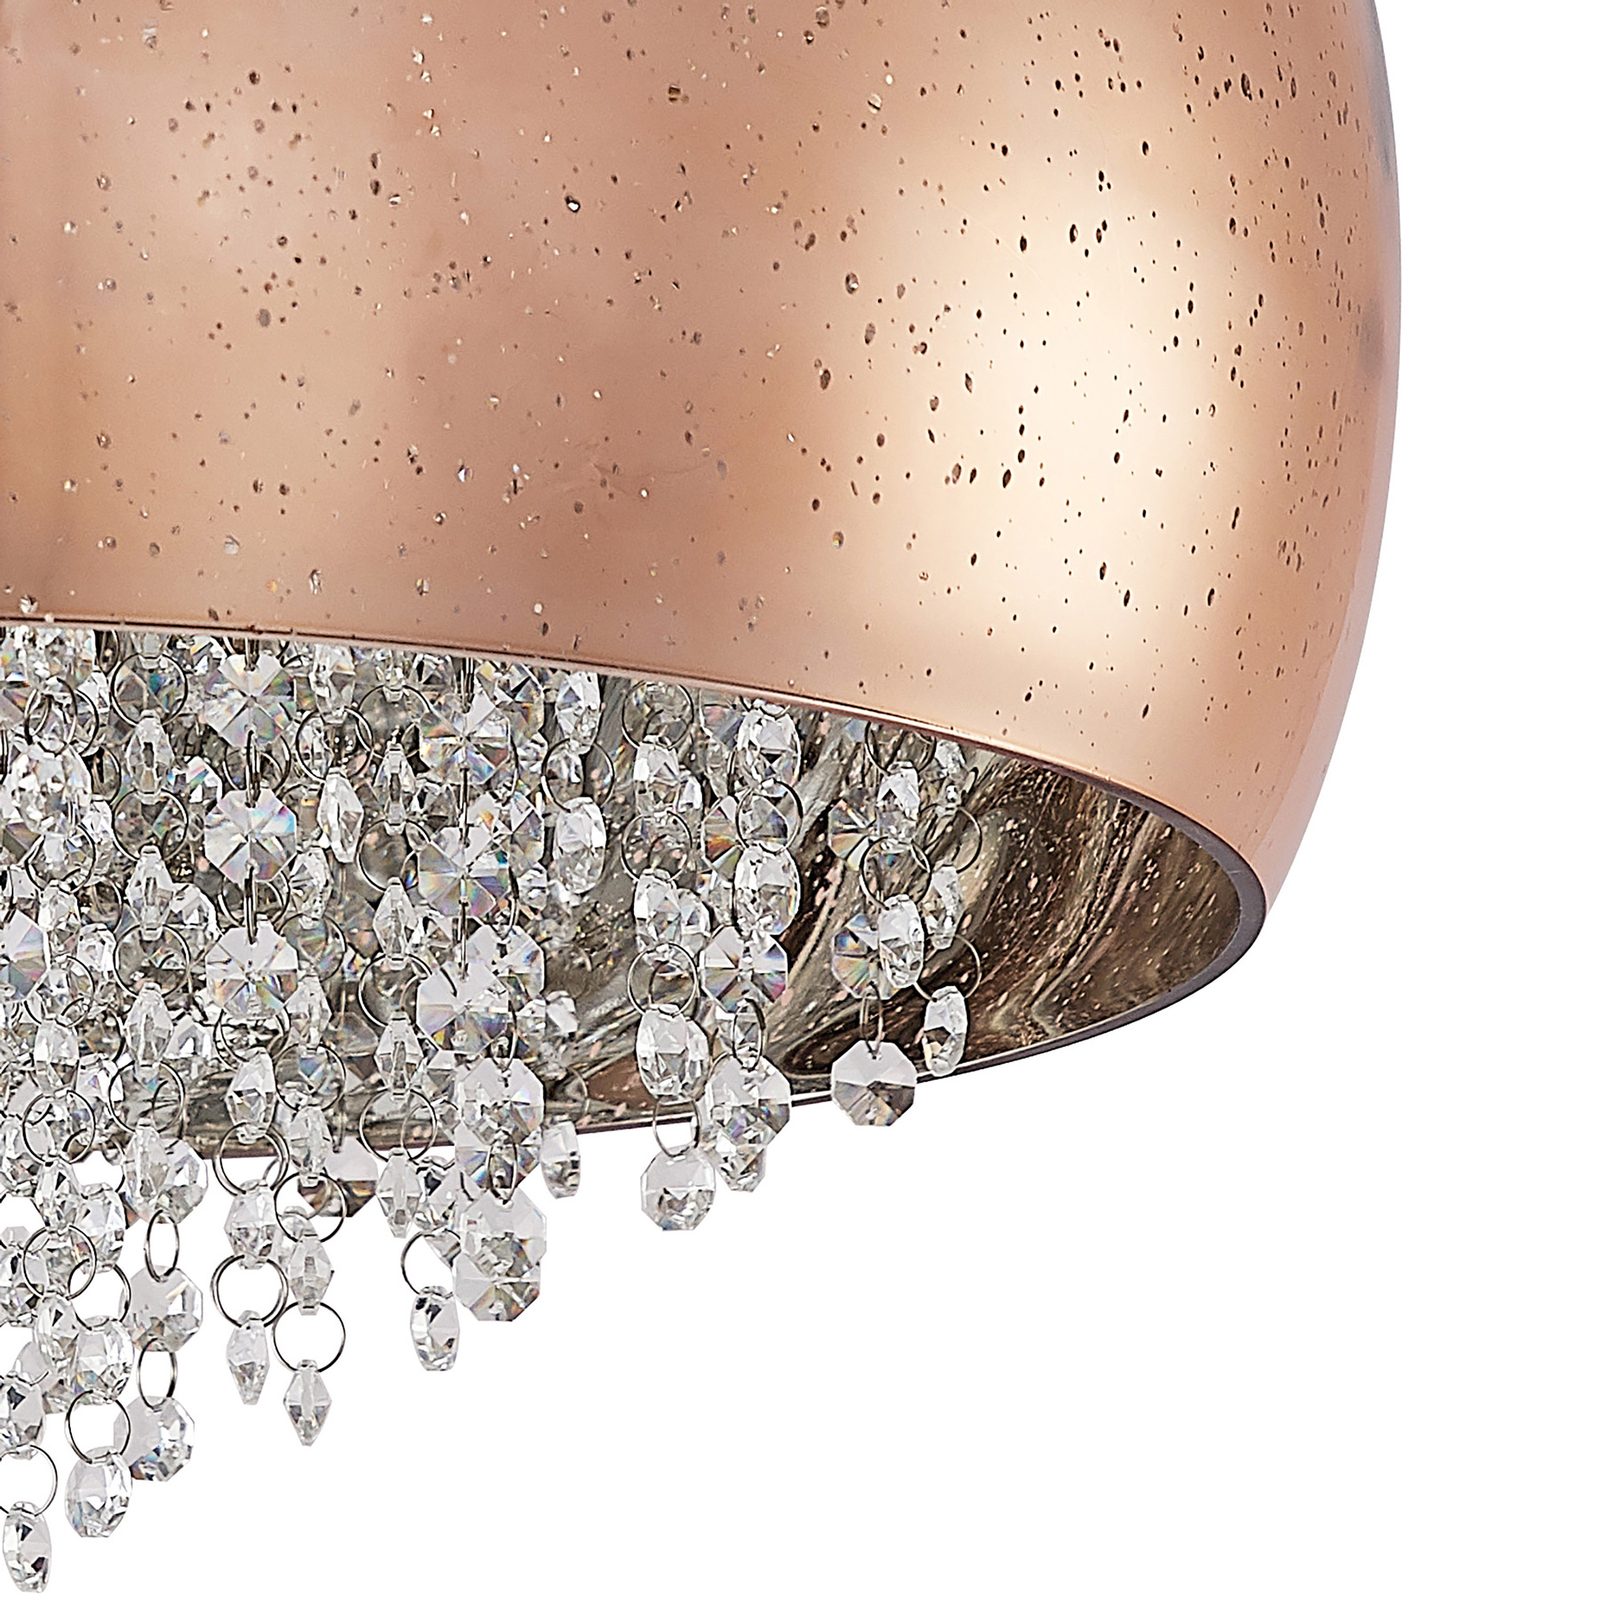 Lucande Elinara crystal ceiling lamp 6-bulb copper